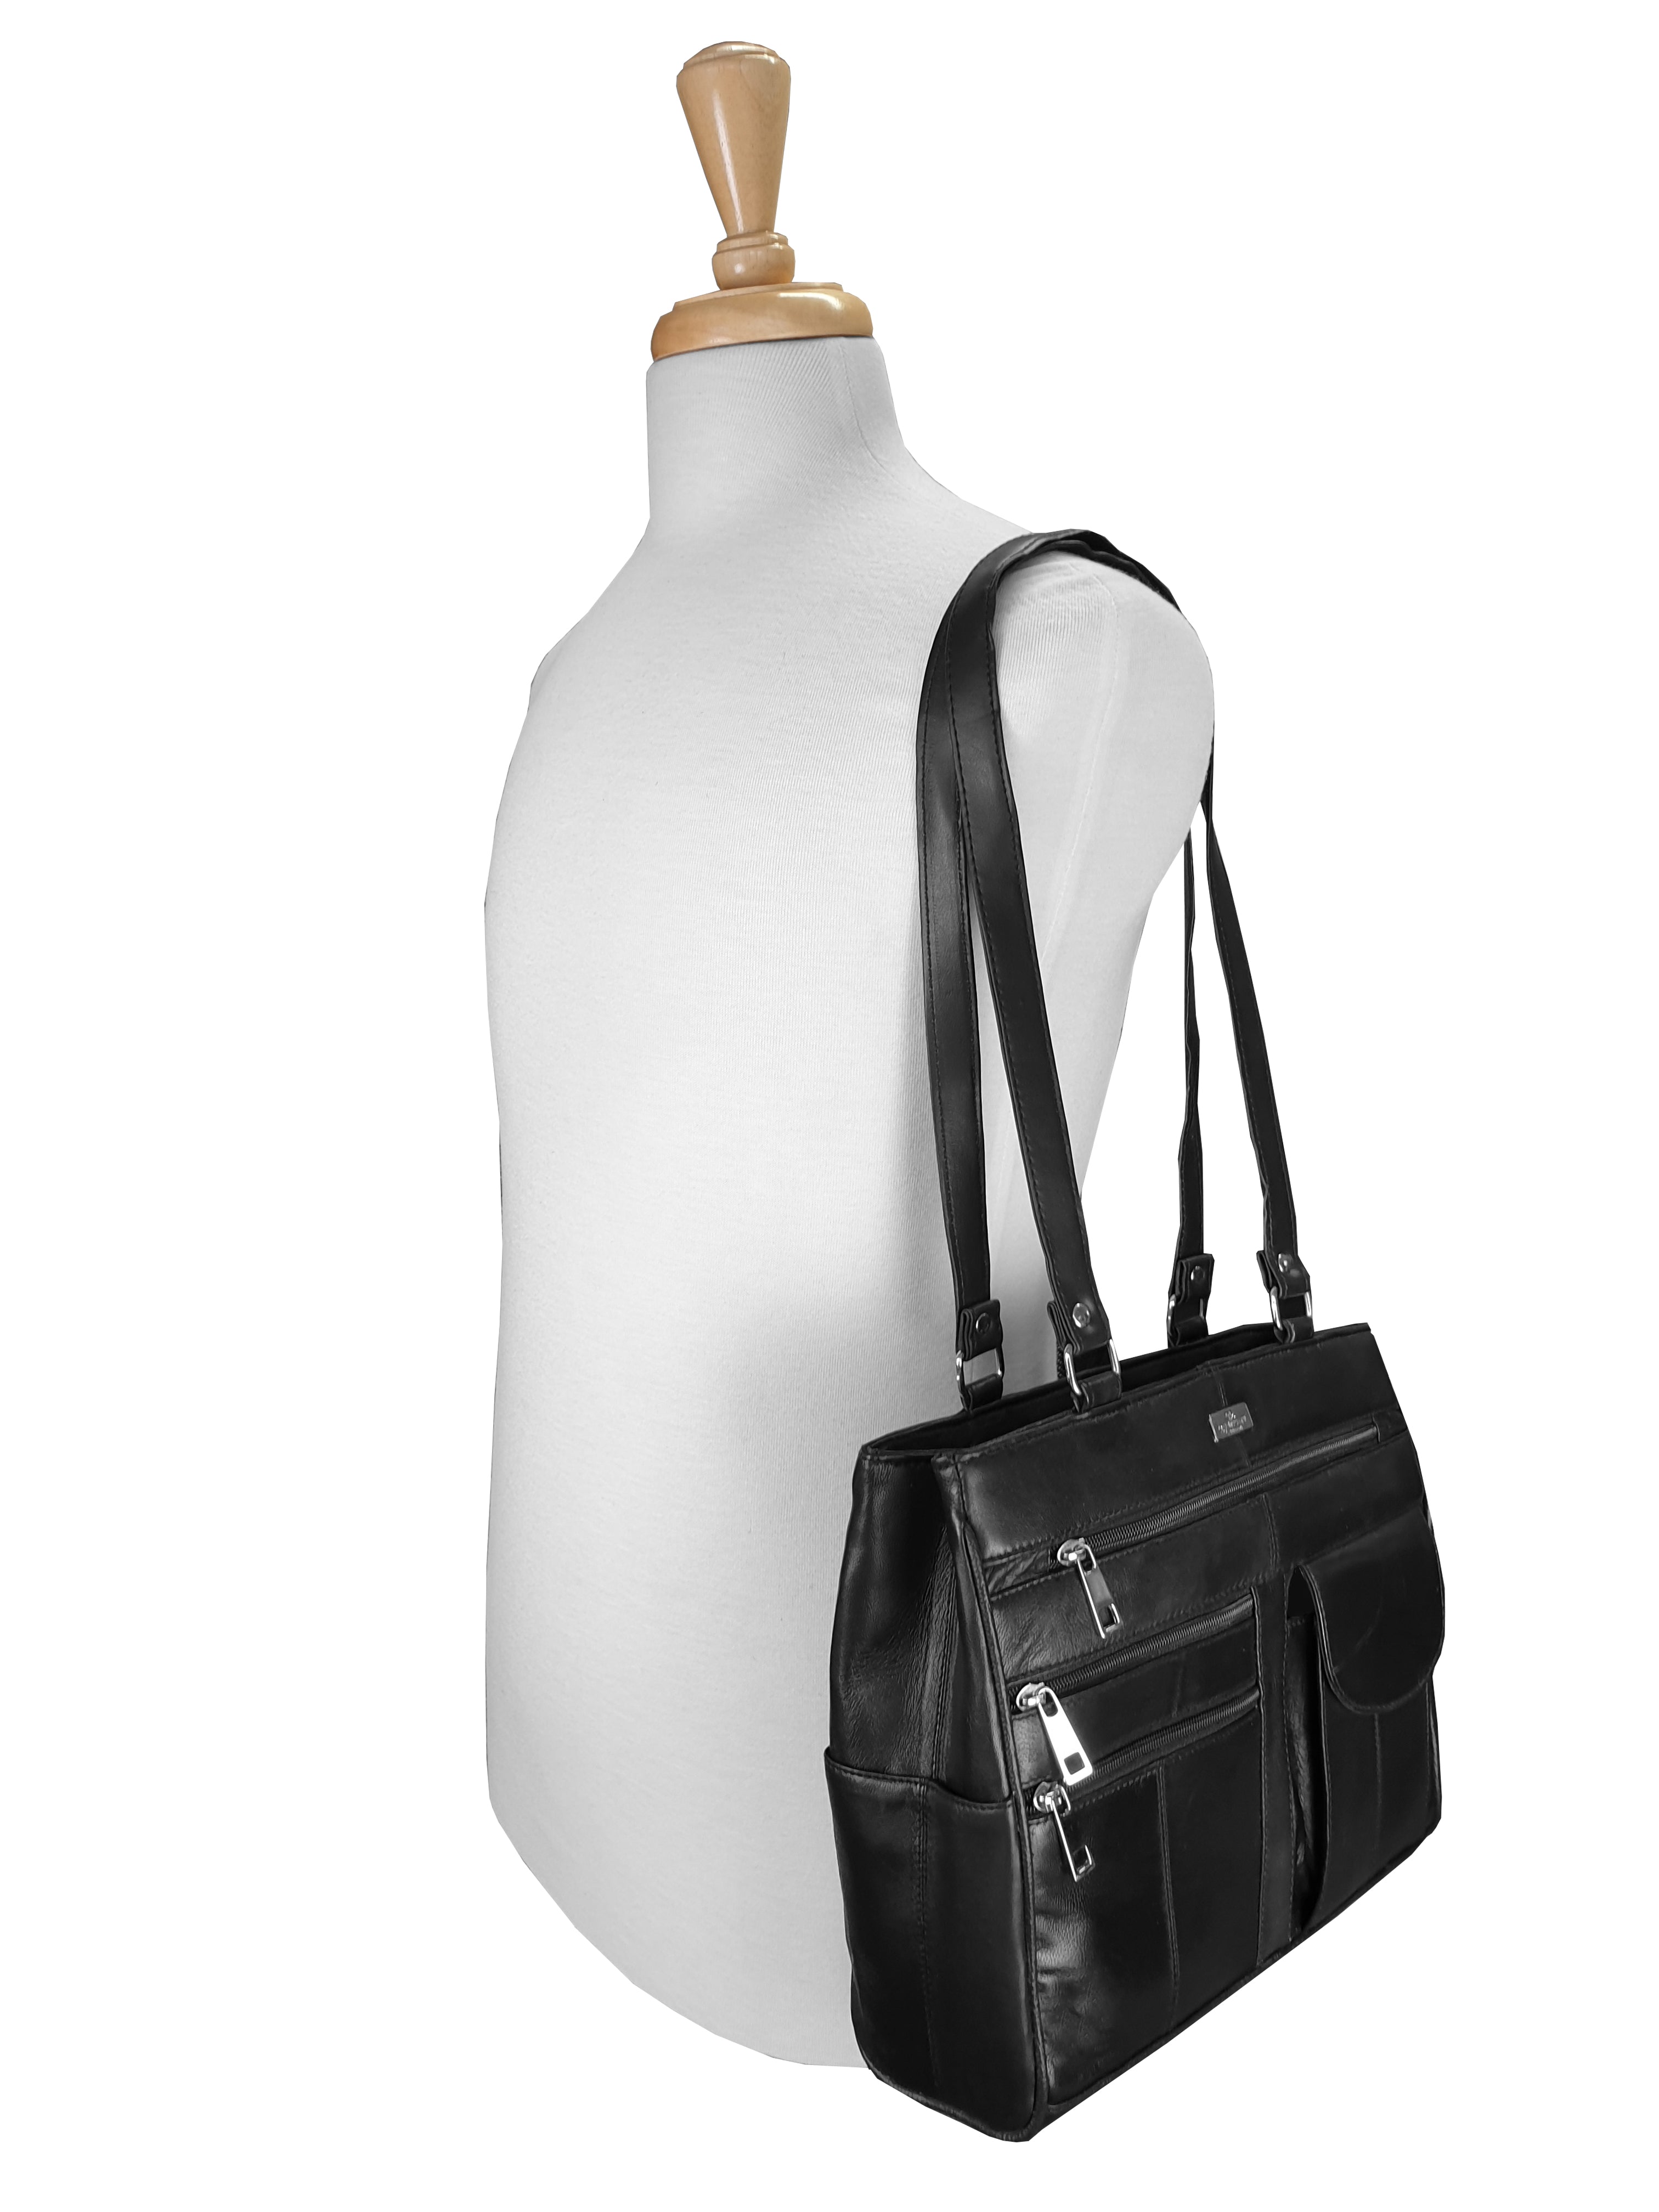 Leather-Handbag-QL173-m.jpg